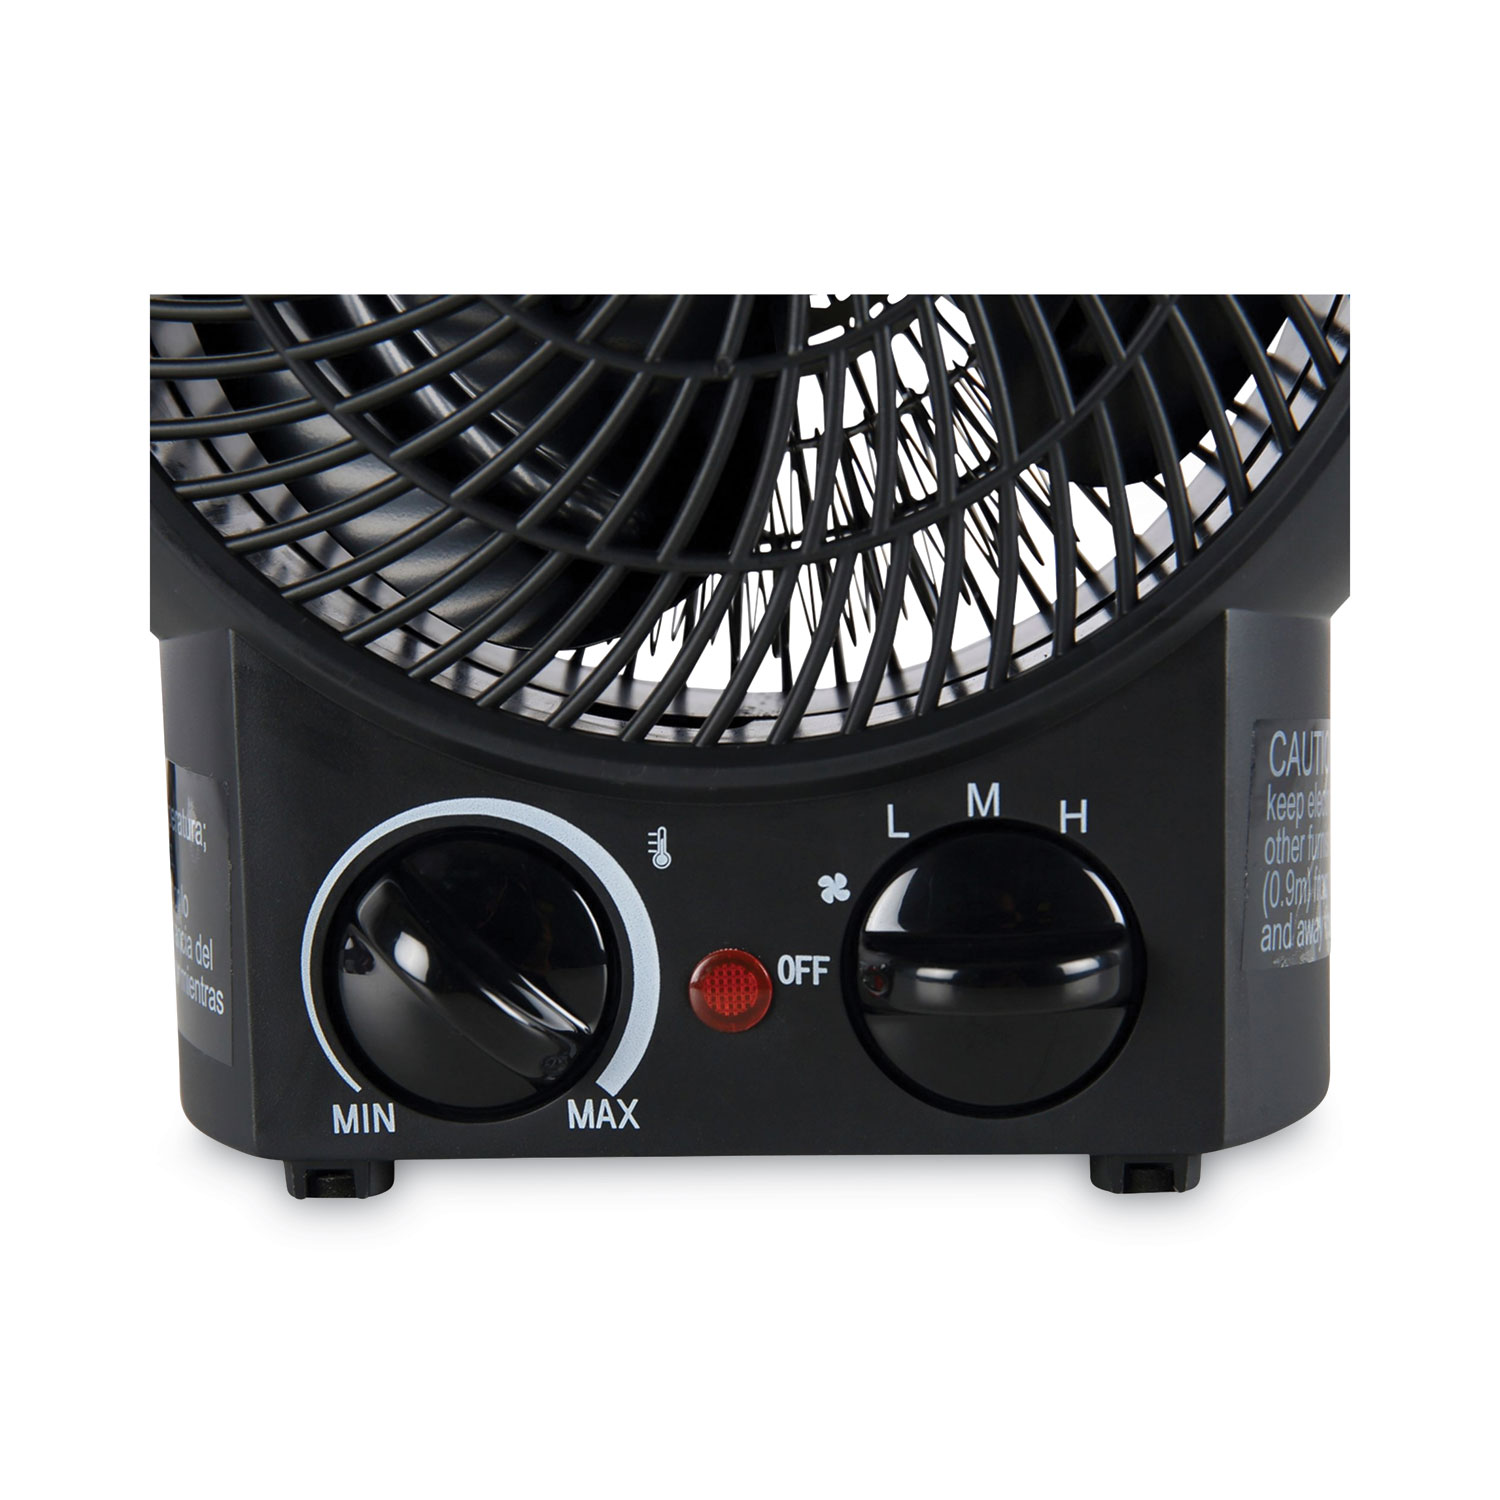 Heater Fan, 1,500 W, 8.25 x 4.37 x 9.5, Black Zuma